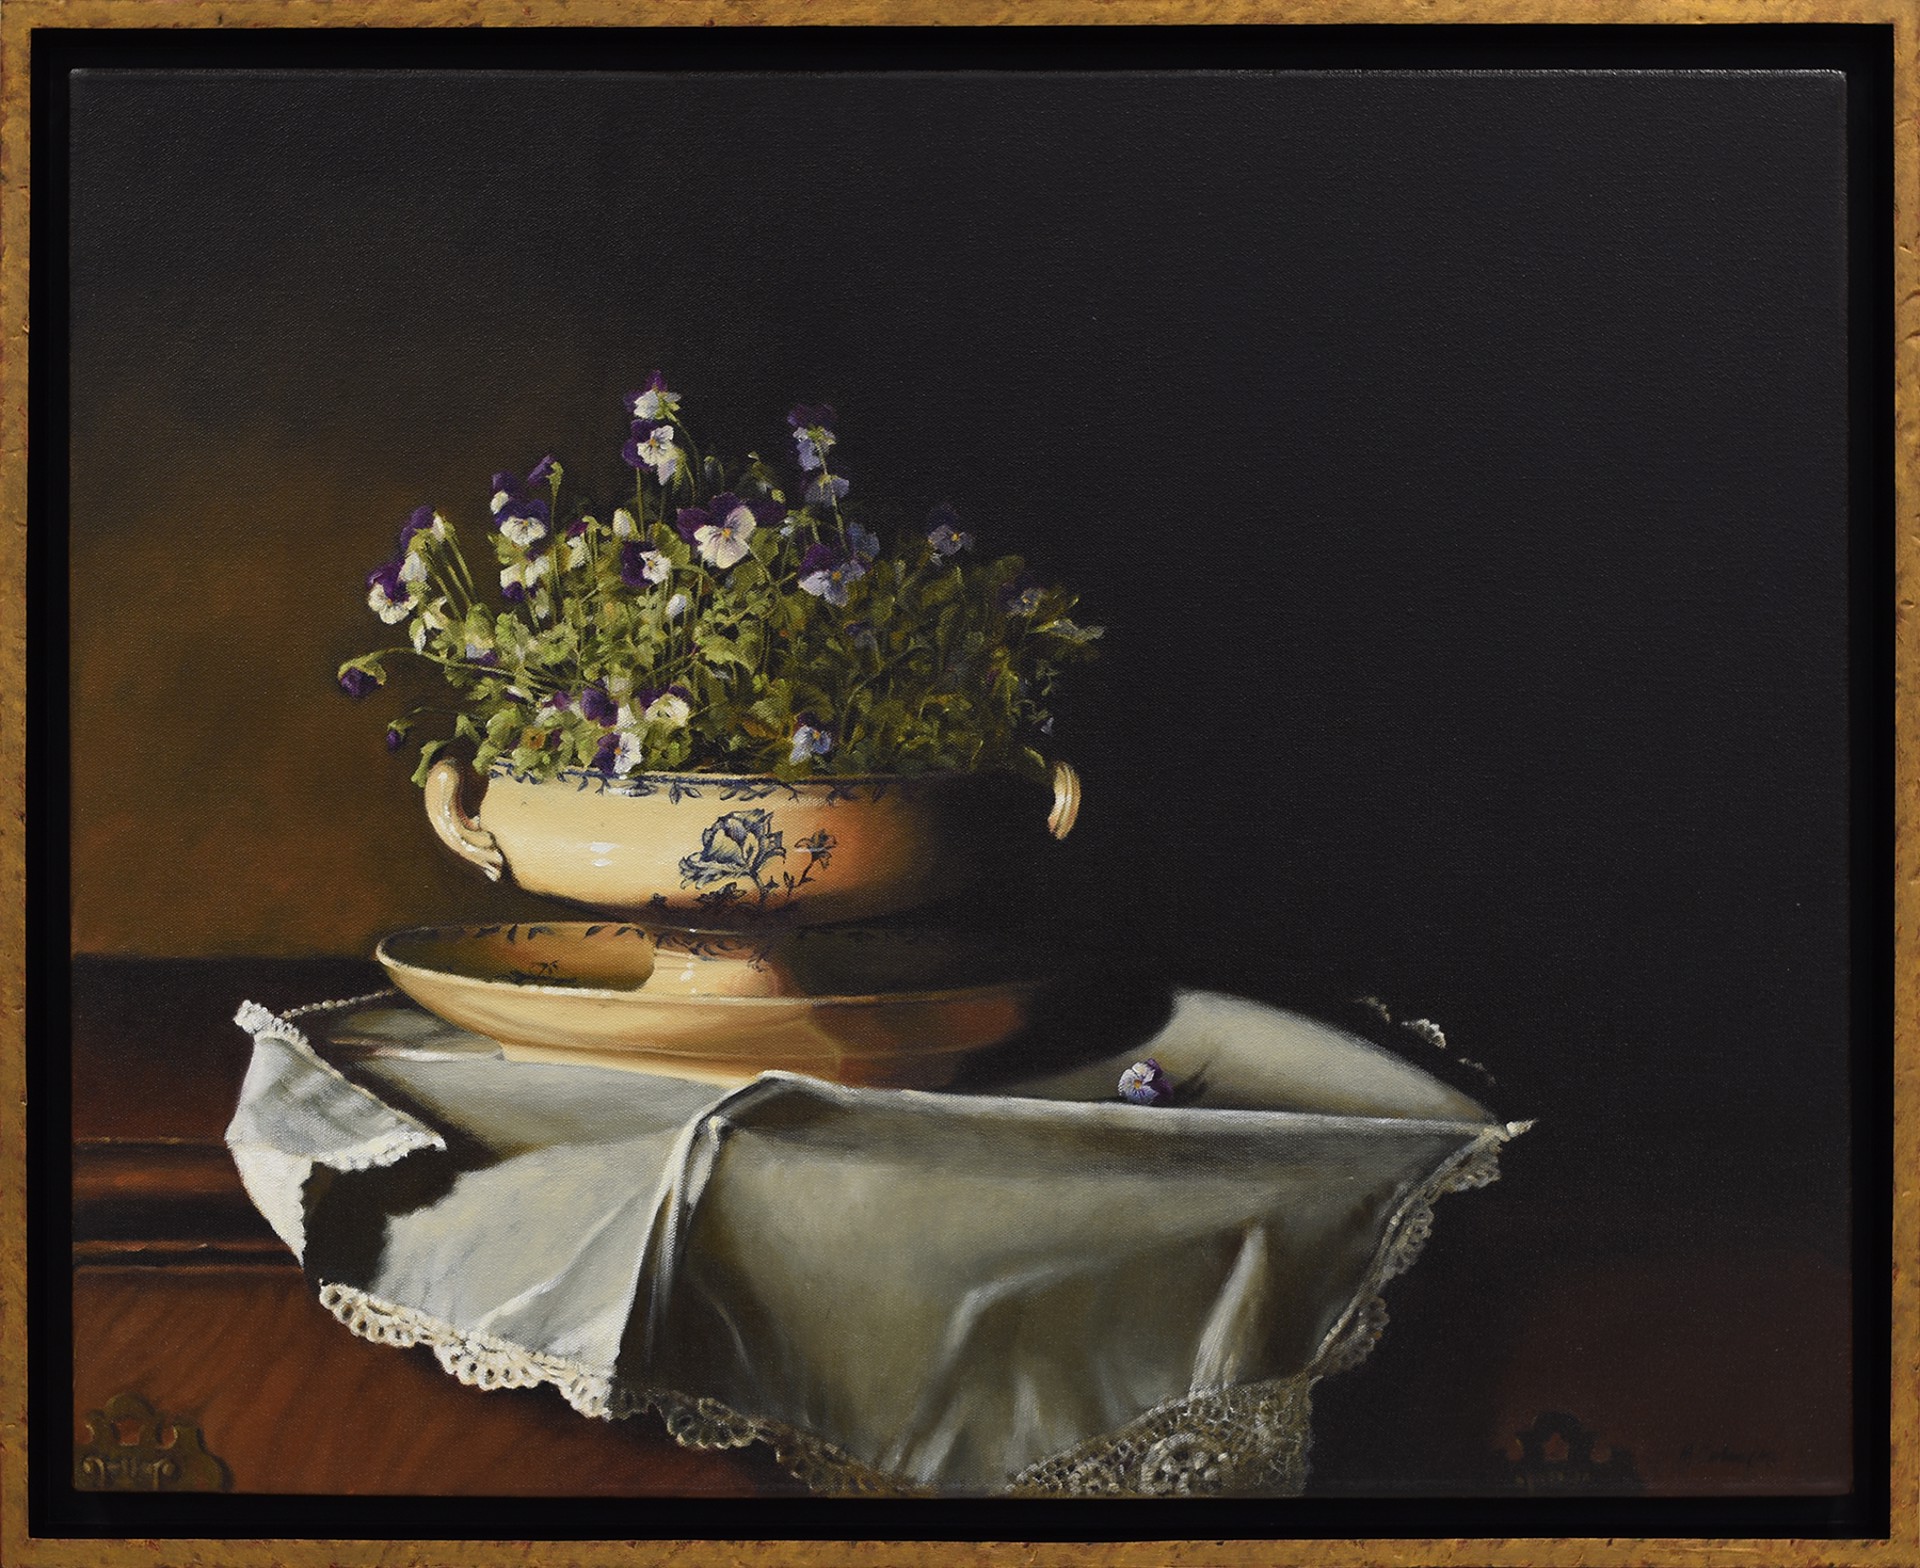 Violas by Mary Calengor